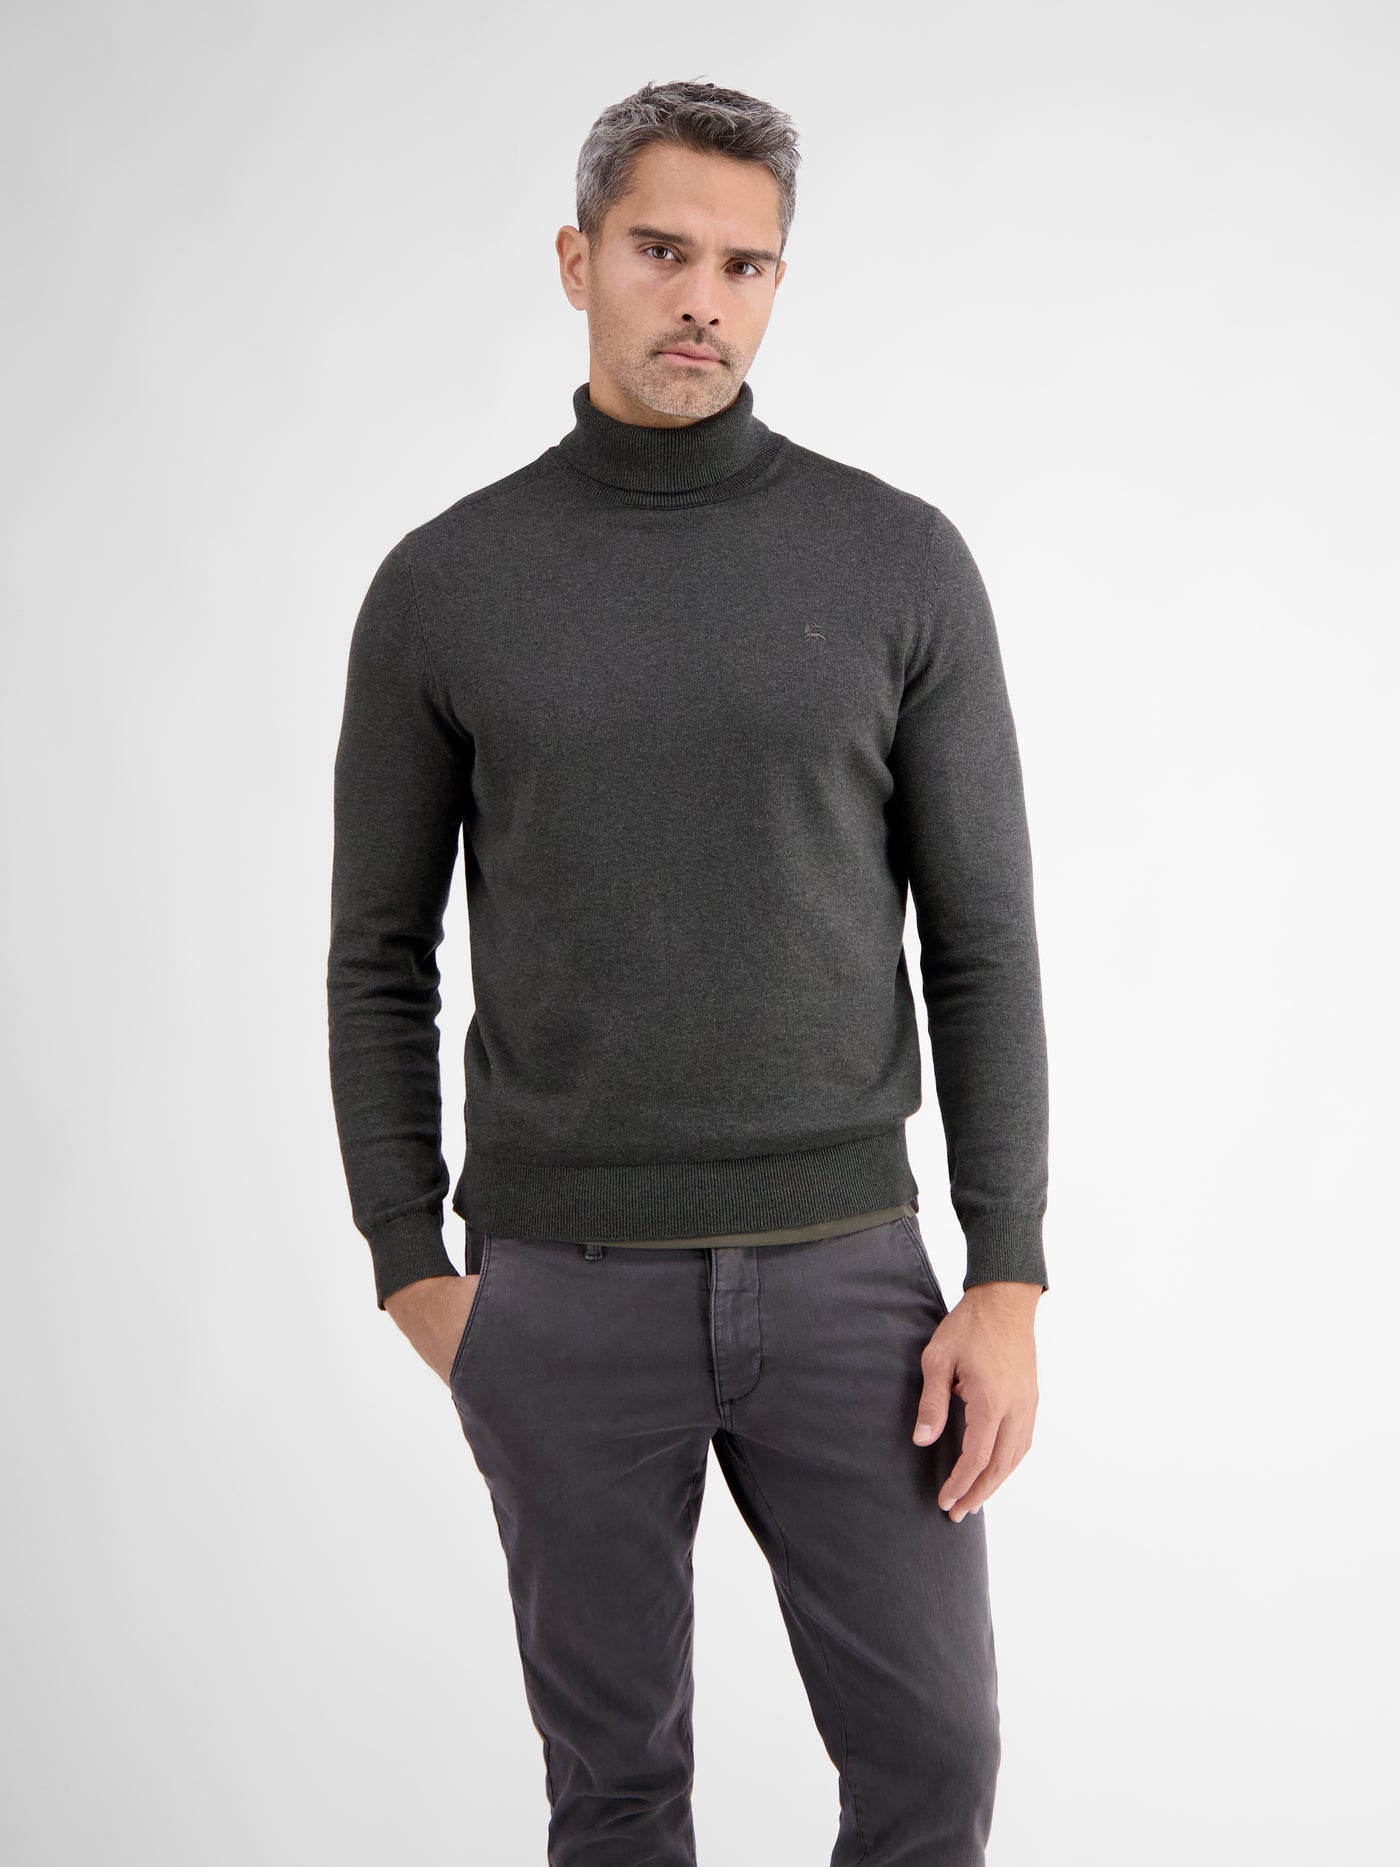 Turtleneck sweater. Flat knit